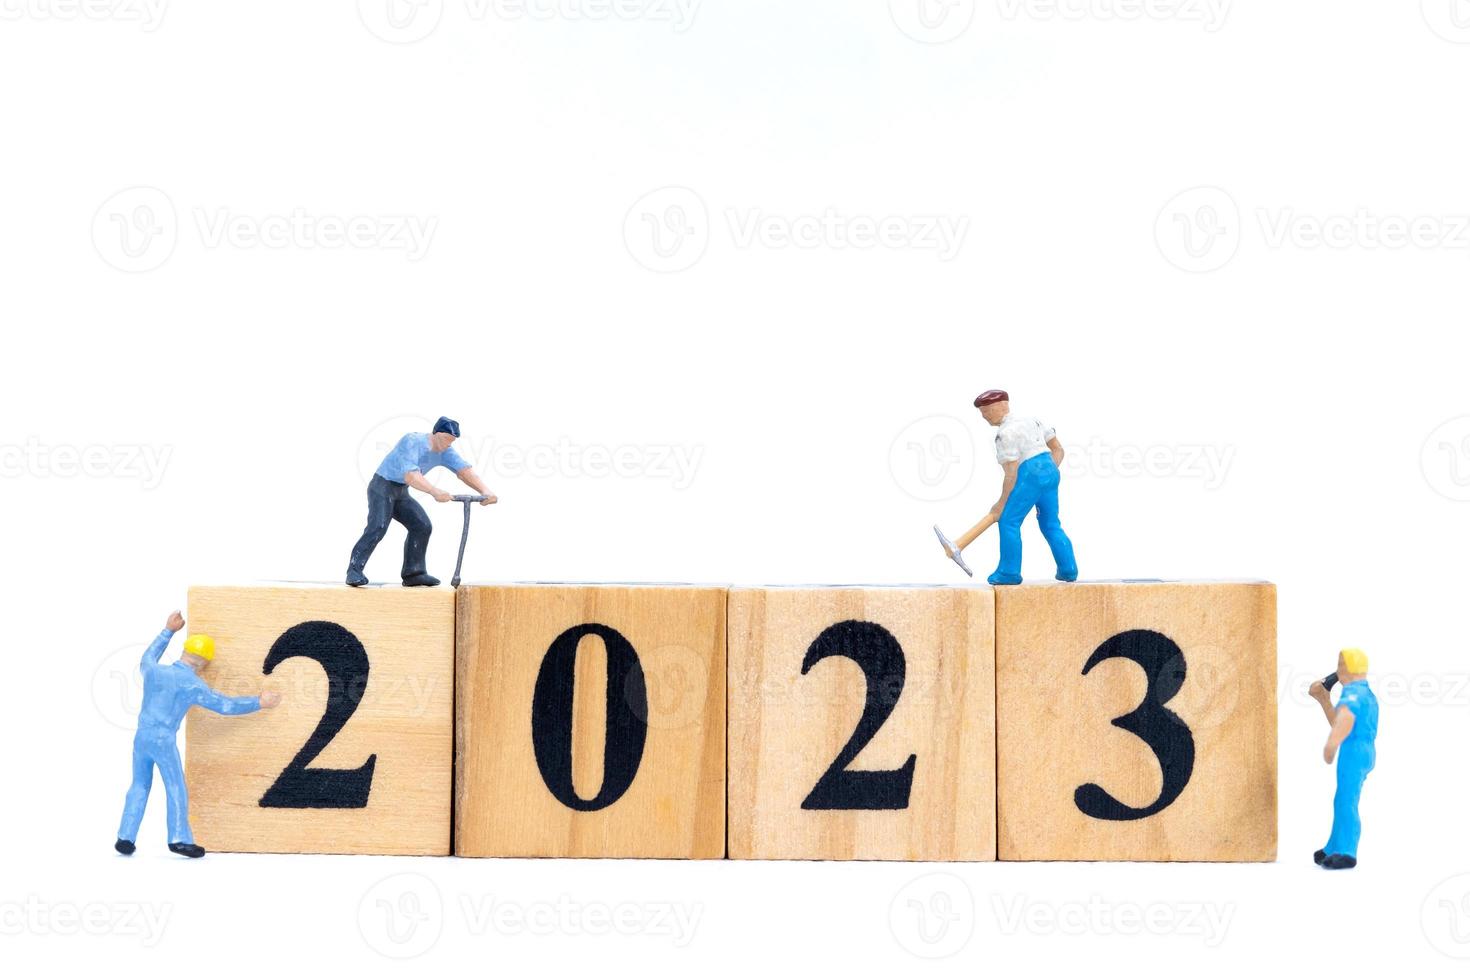 miniatuur mensen werknemer team maken nummer 2023 op houten blok foto